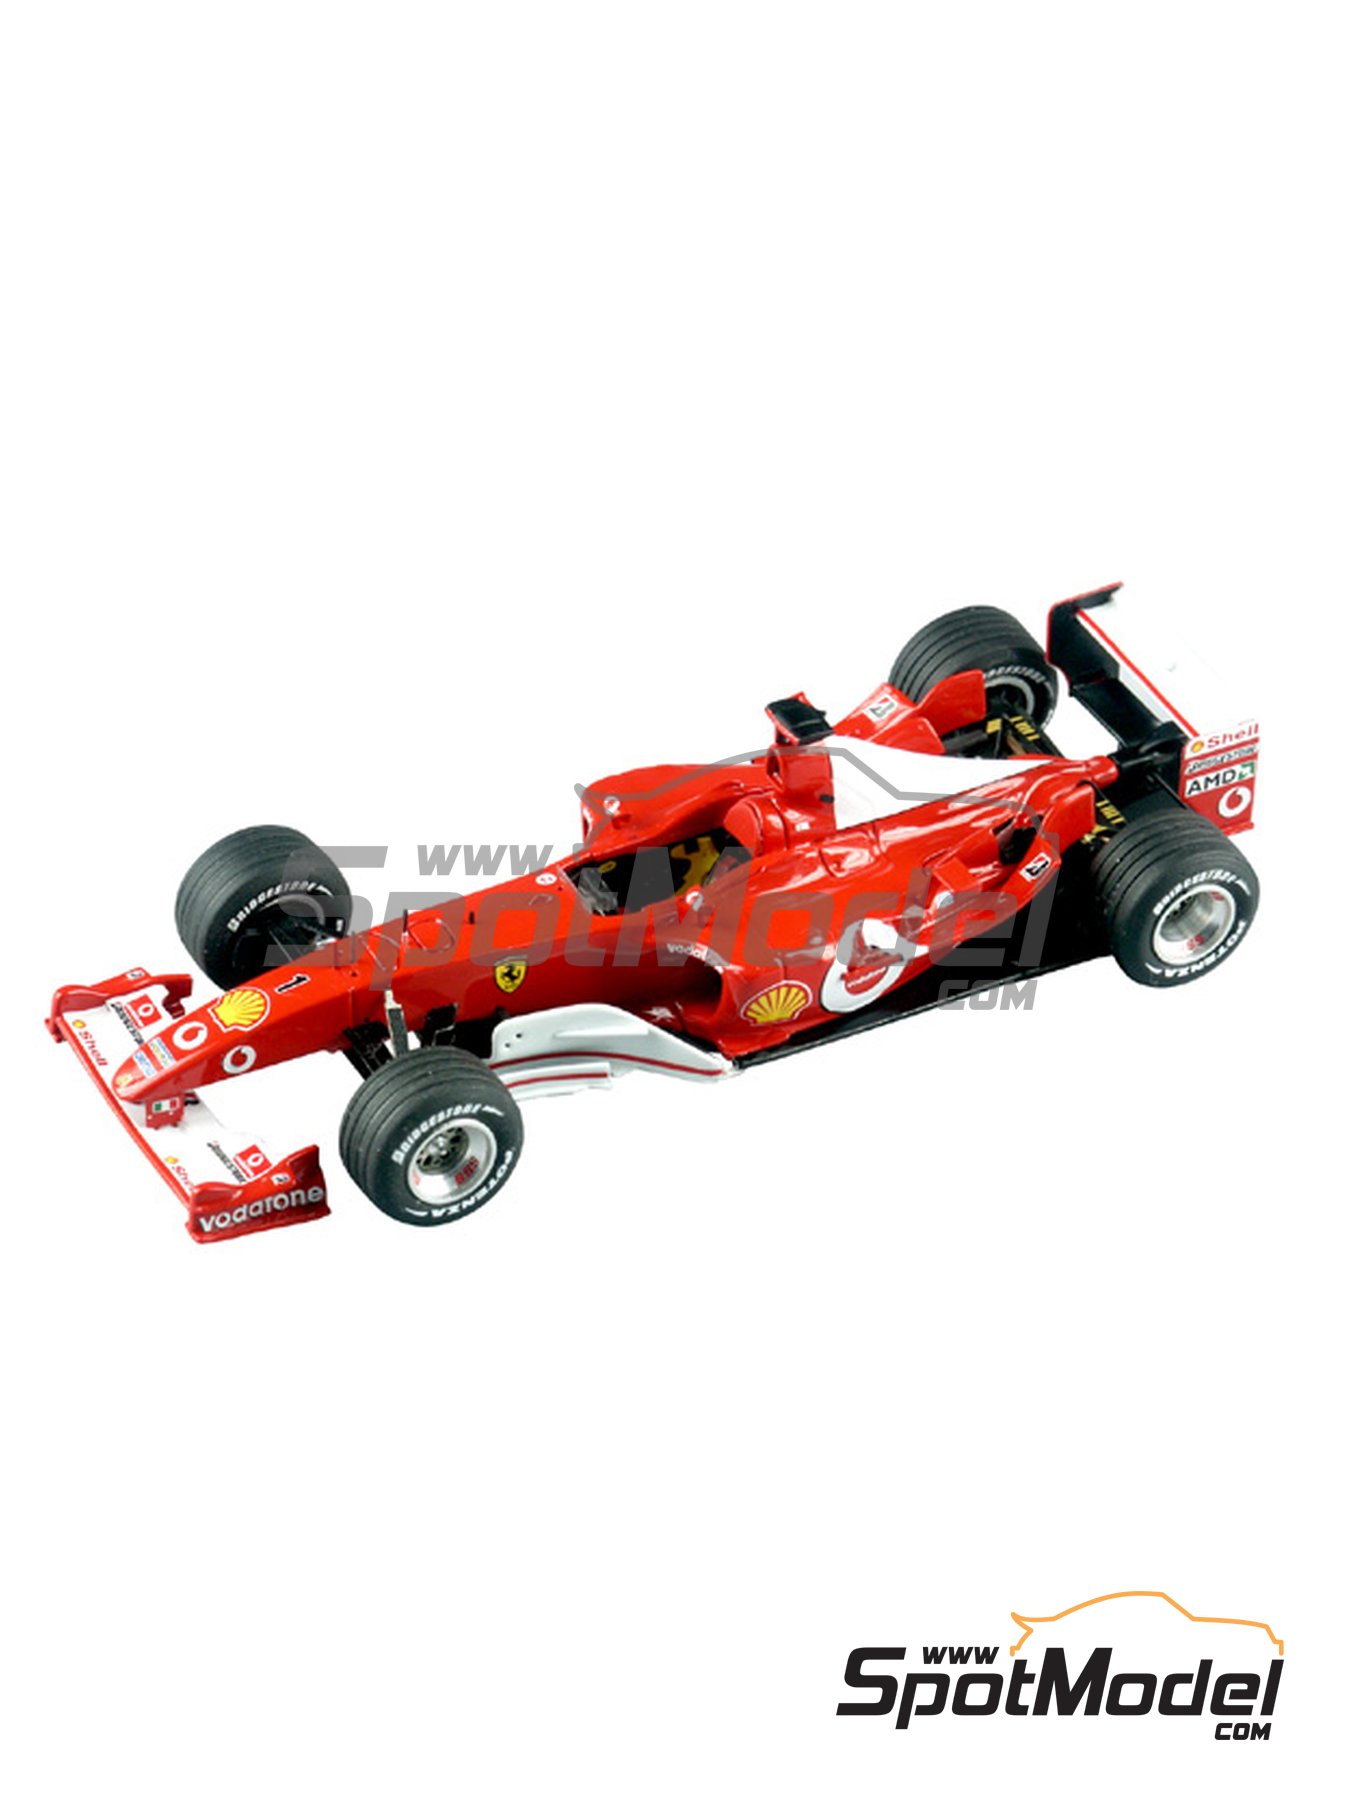 Tameo Kits TMK337: Car scale model kit 1/43 scale - Ferrari F2003